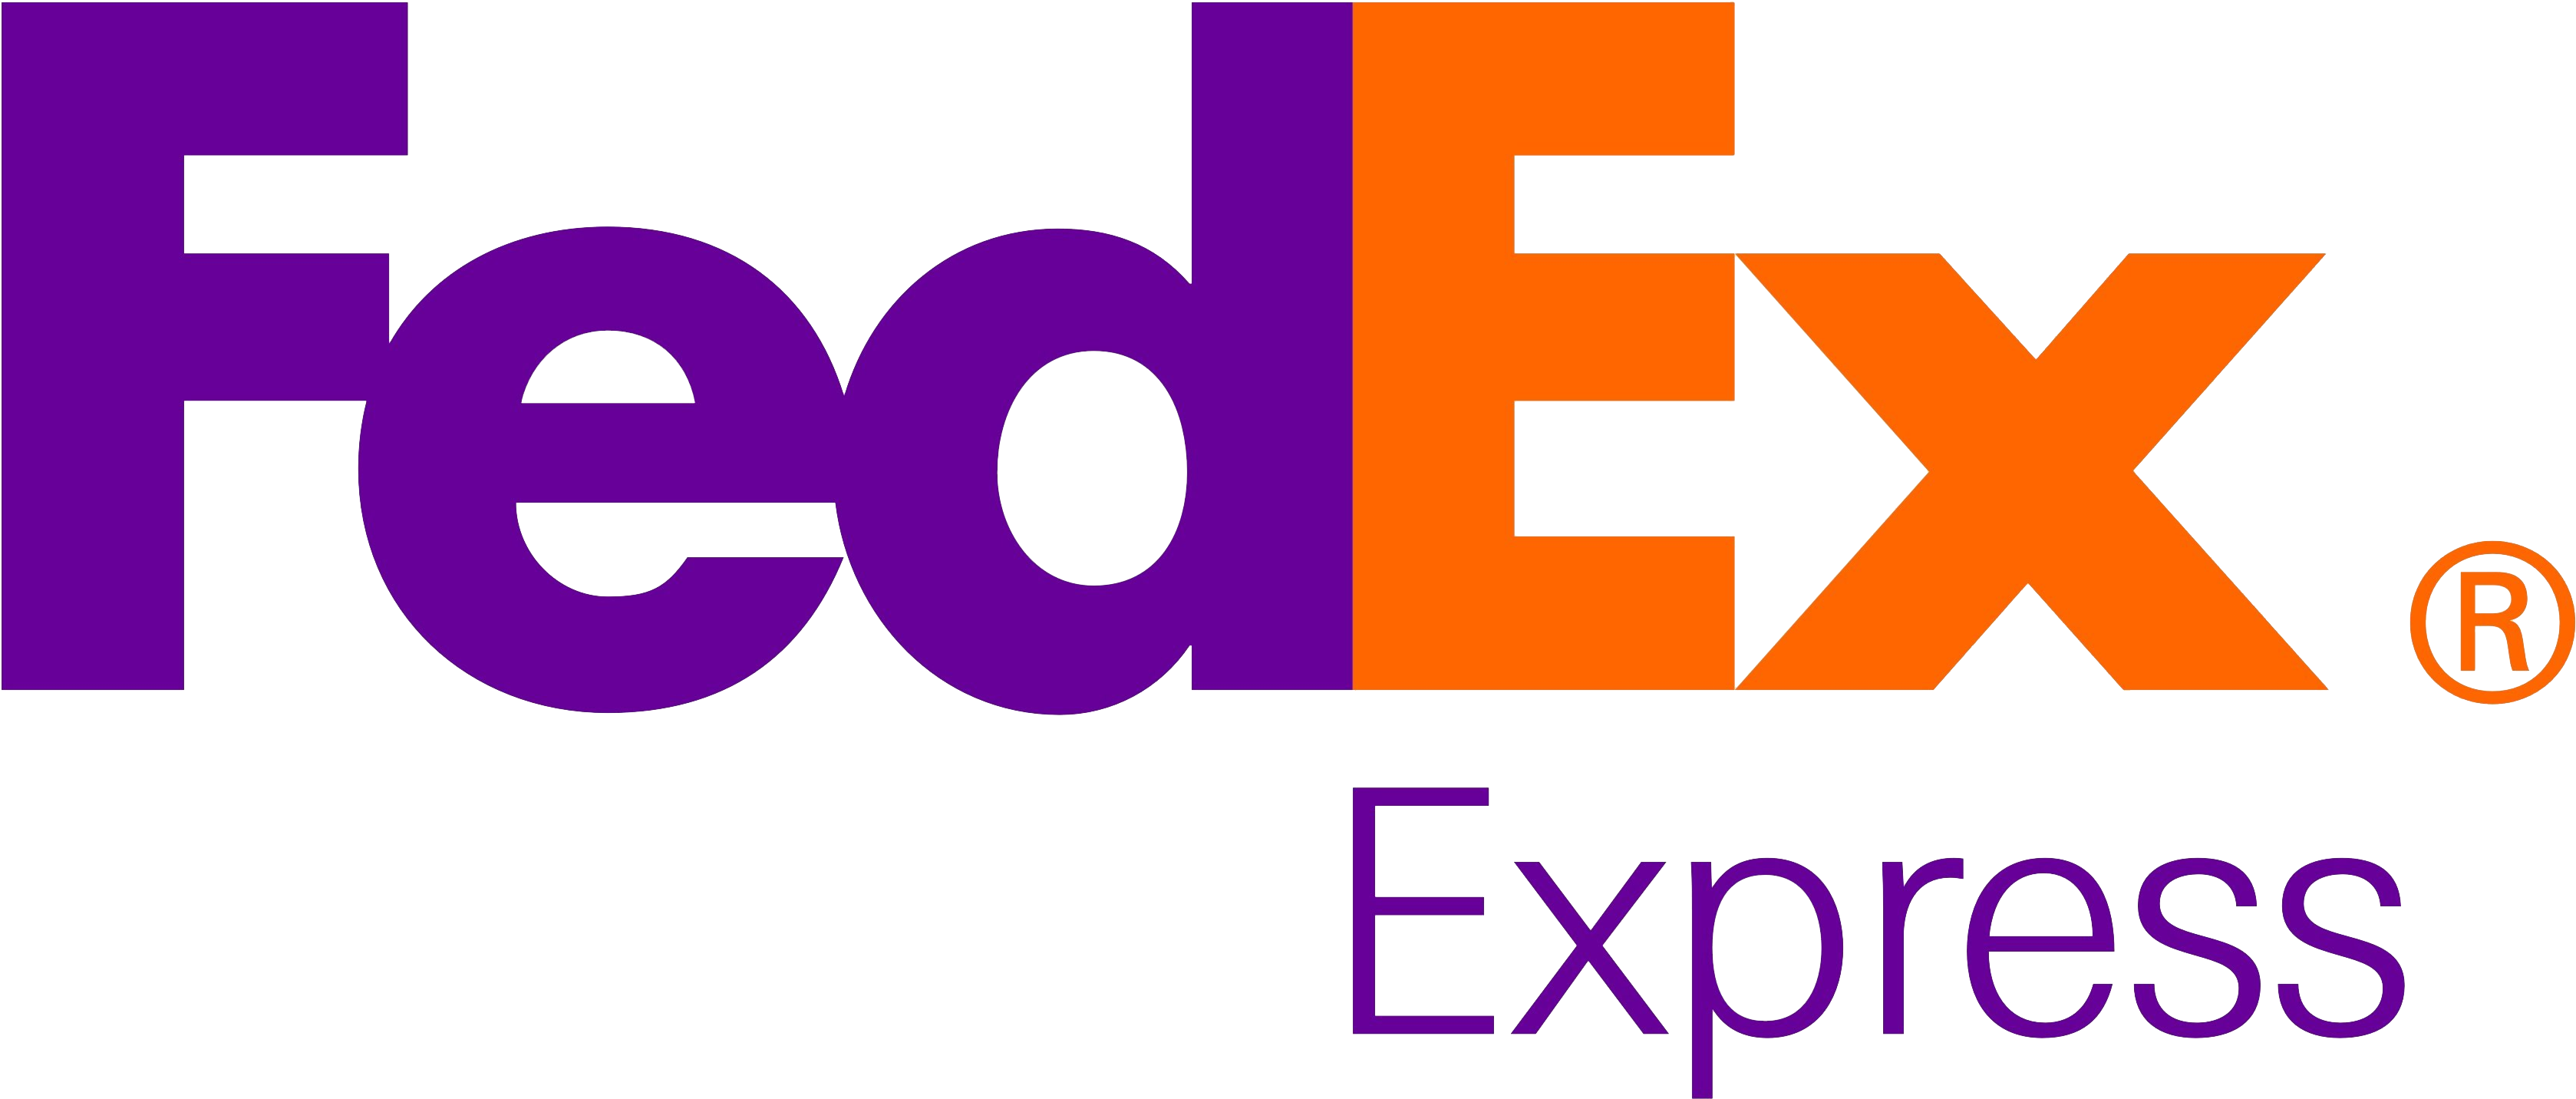 Fedex Clip Art Images Gallery - Fedex Express Logo Png (3624x1650)